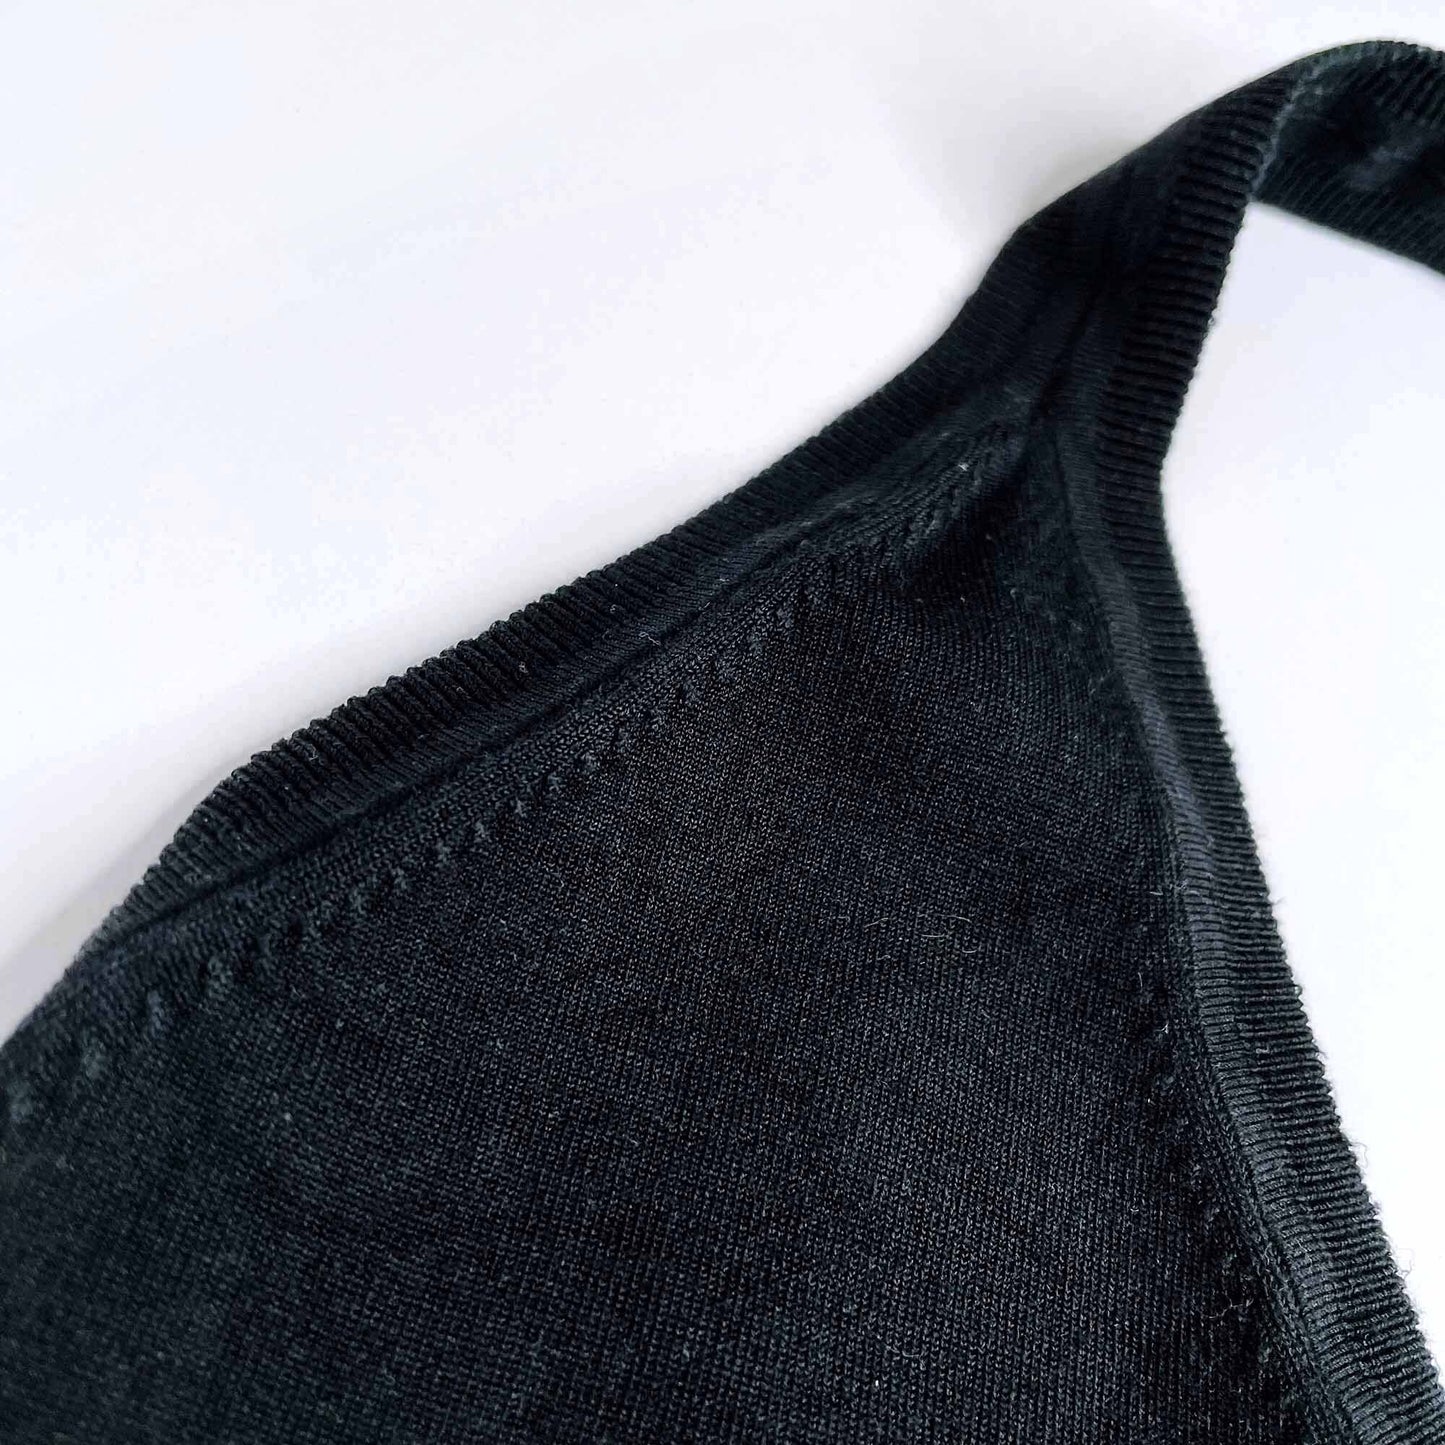 essendi silk blend knit halter top - size small